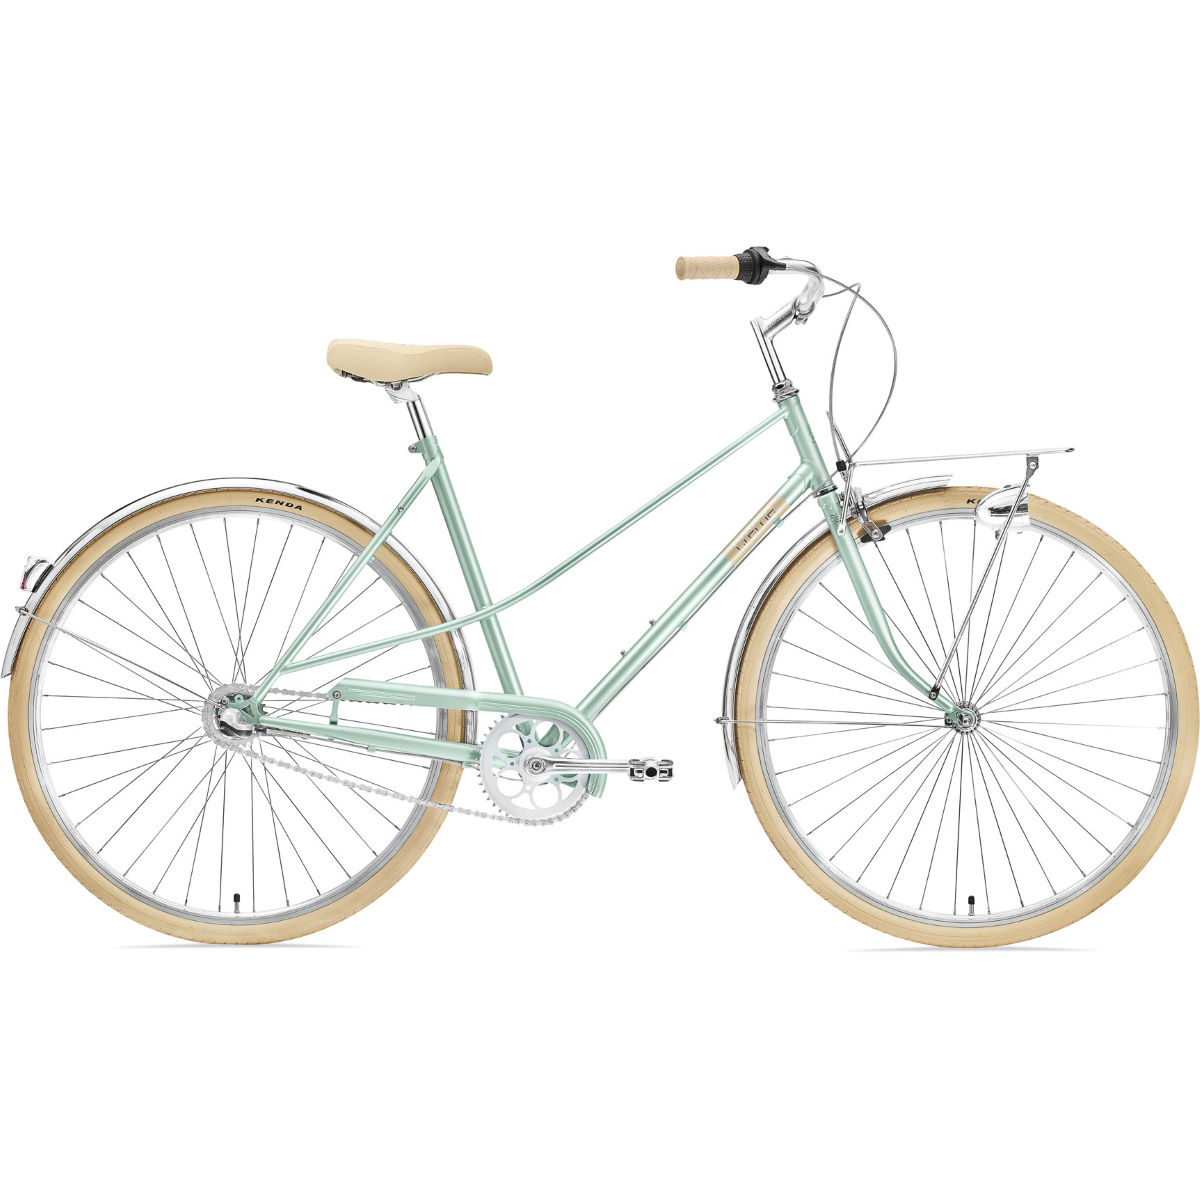 Bicicleta urbana Creme Caferacer Lady Uno (2021) - Bicicletas híbridas